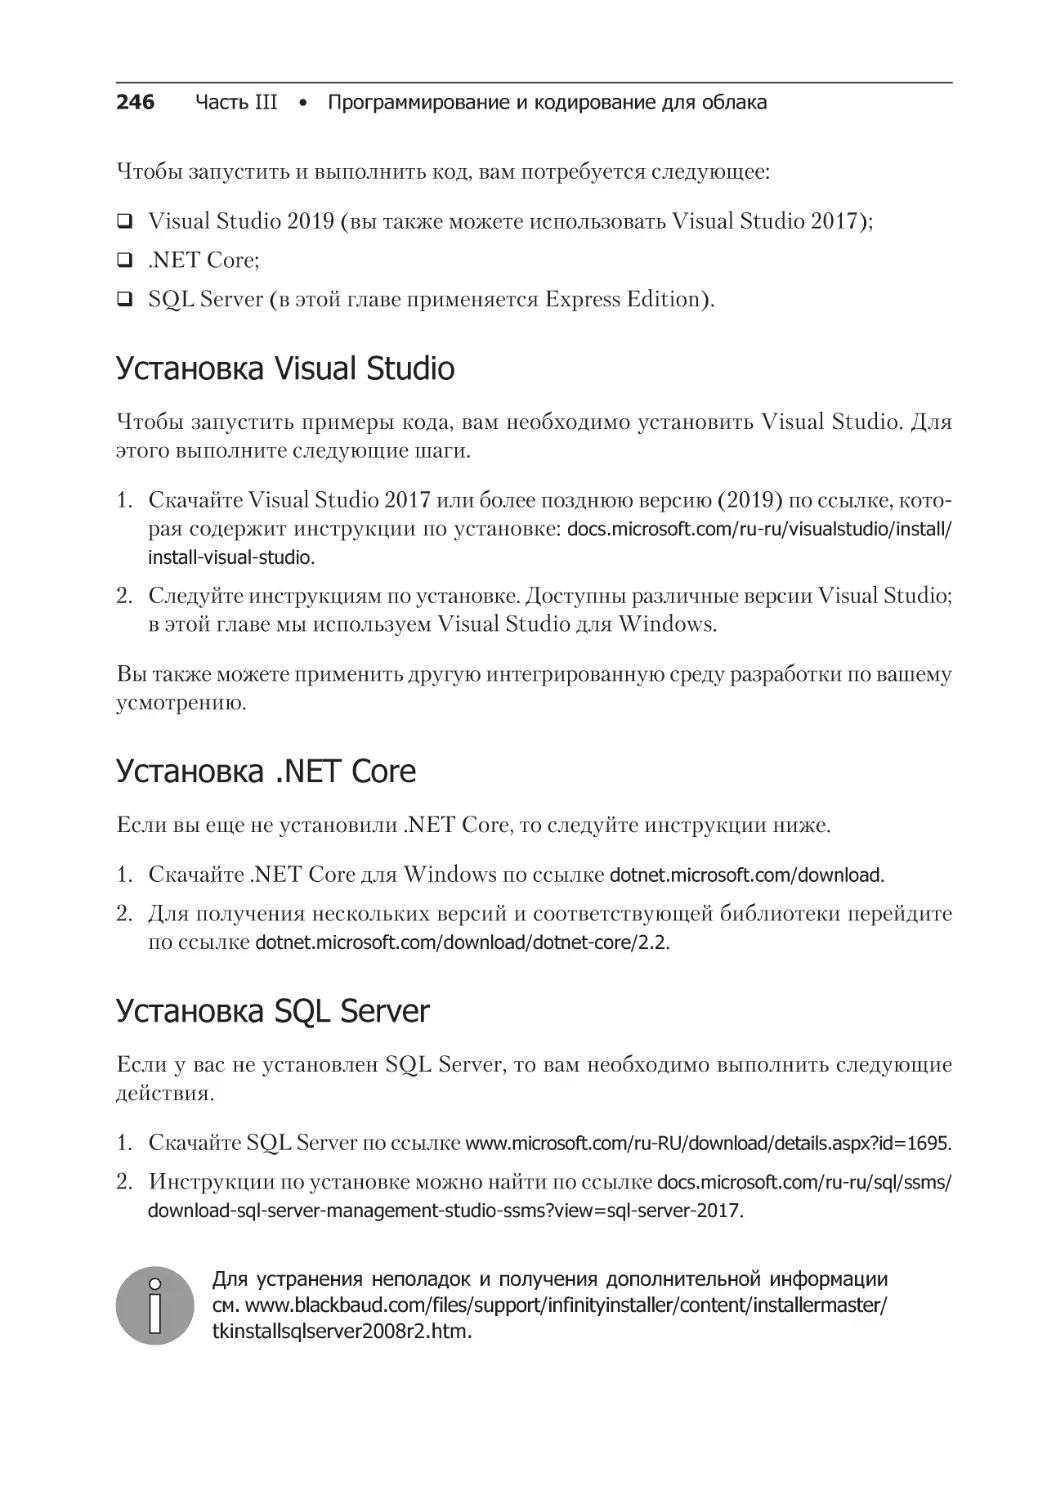 Установка Visual Studio
Установка .NET Core
Установка SQL Server